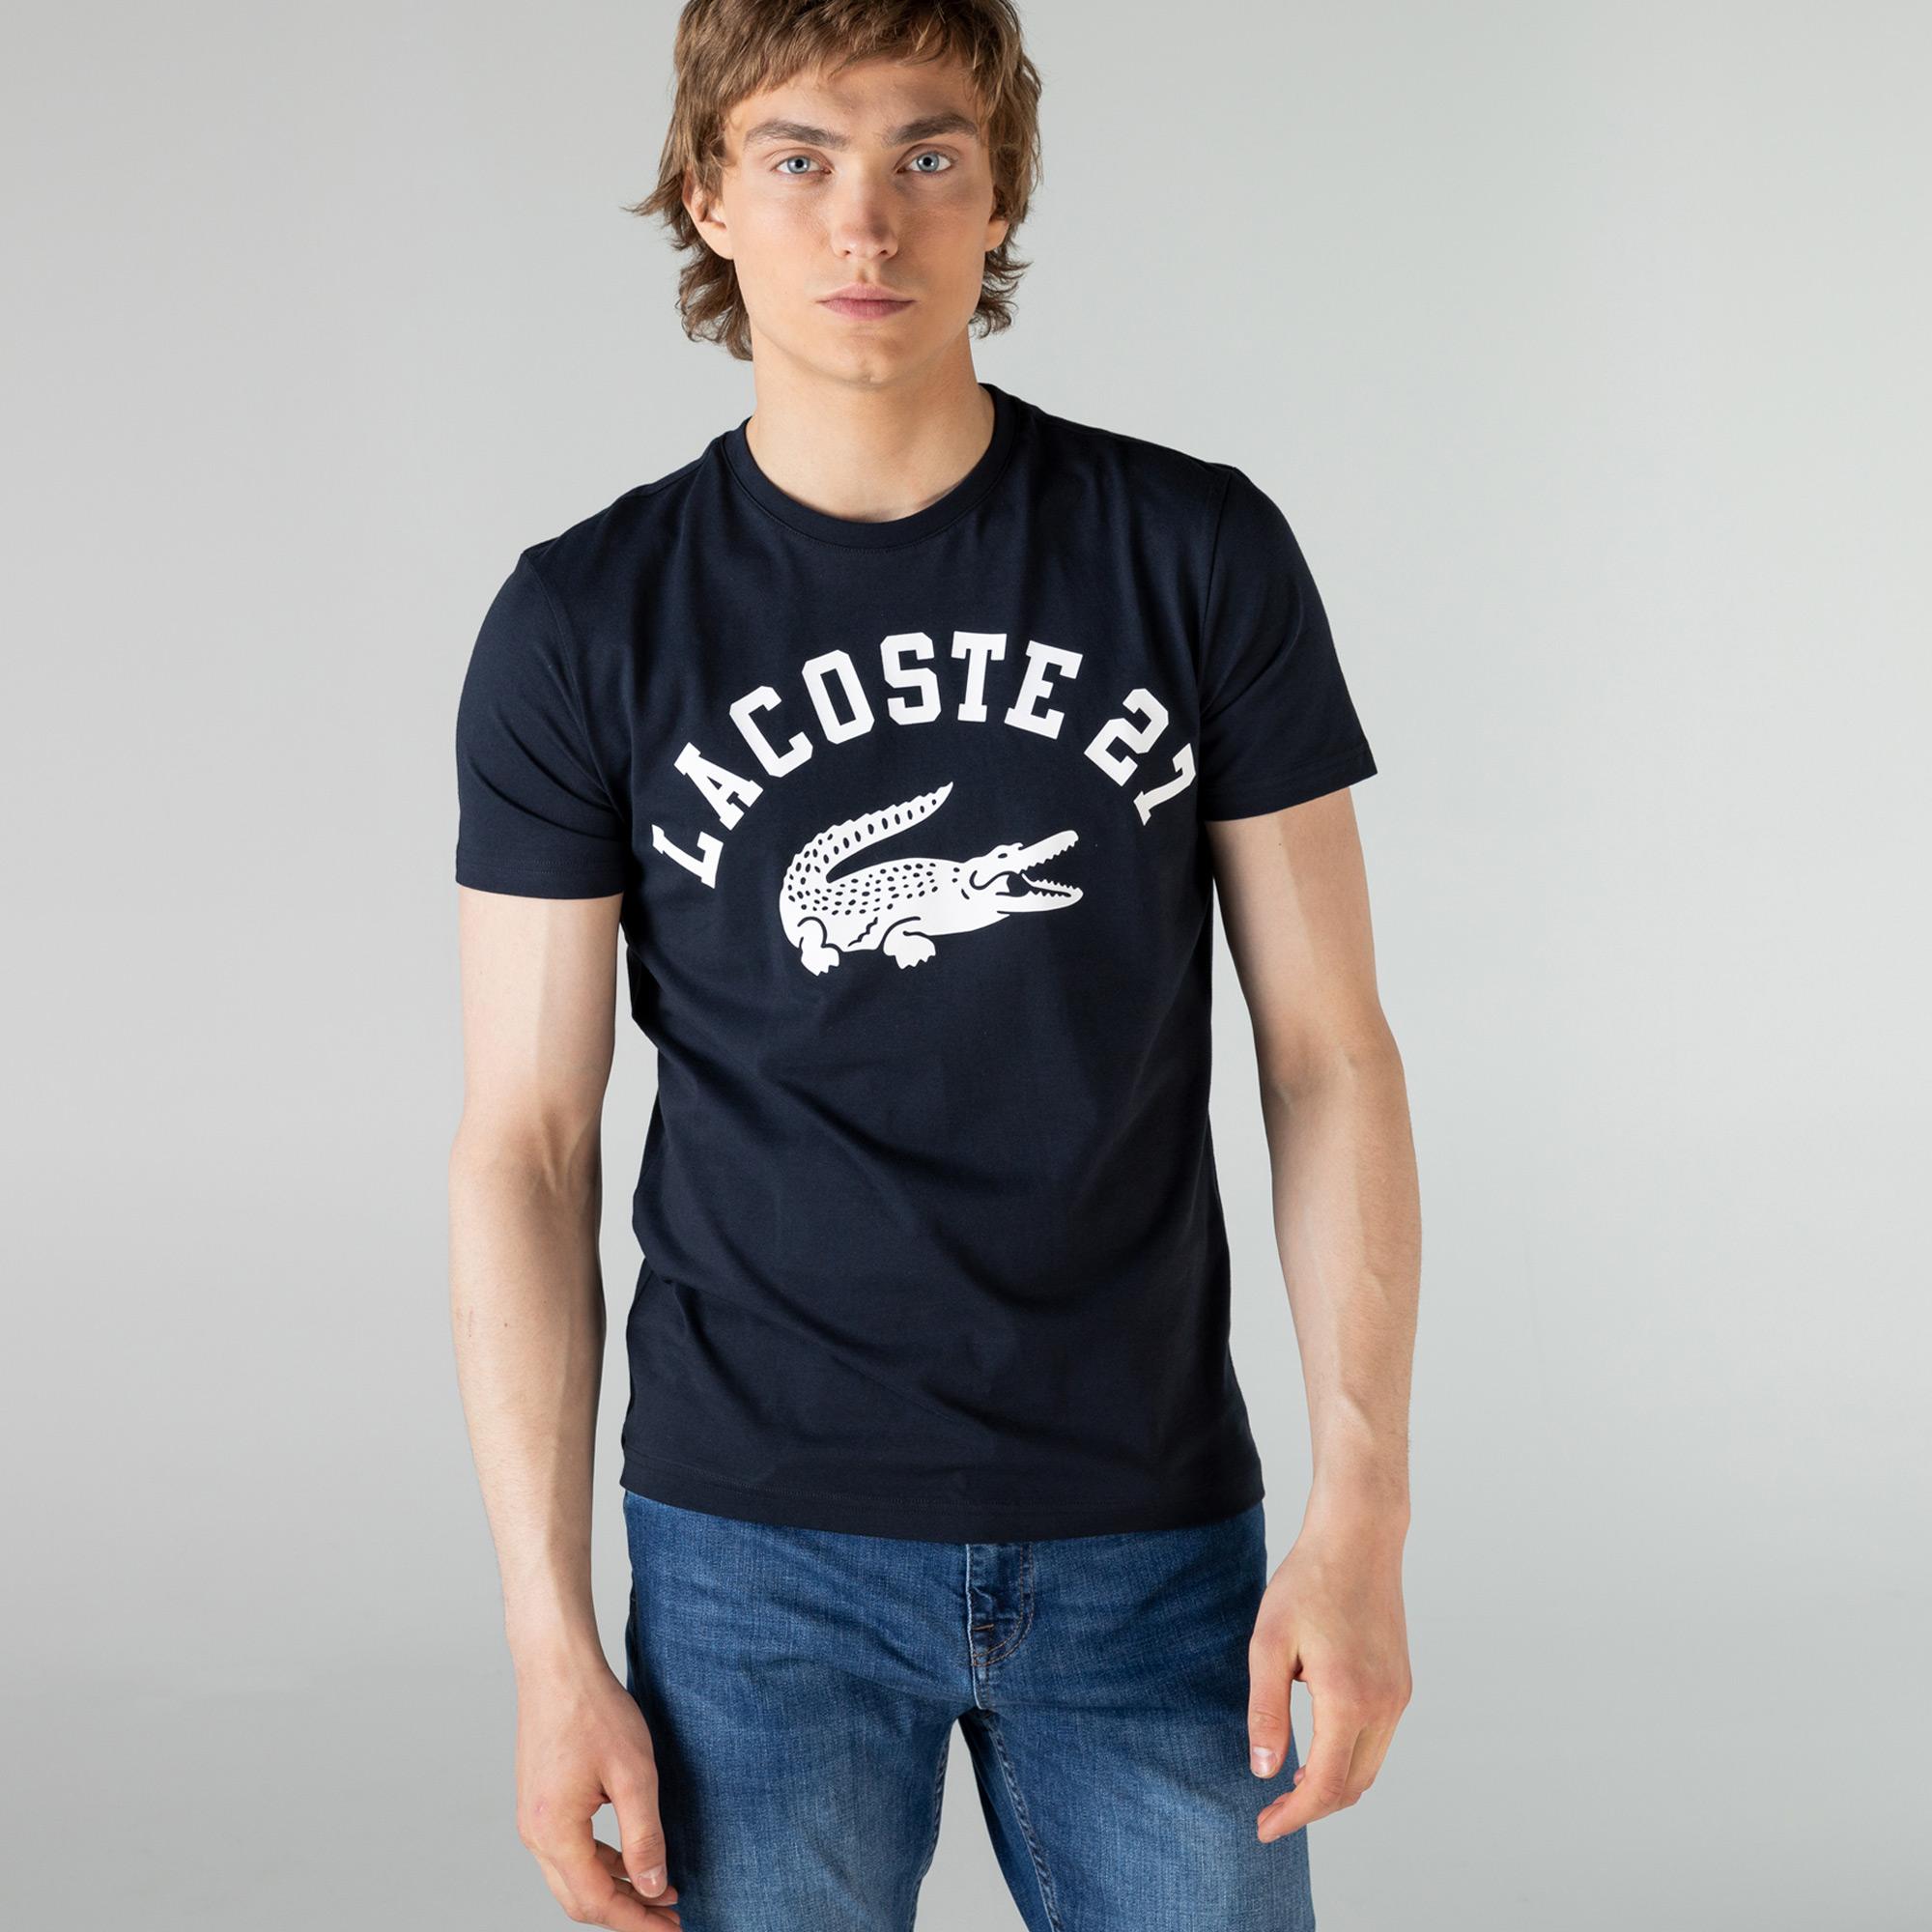 Lacoste T-shirt męski